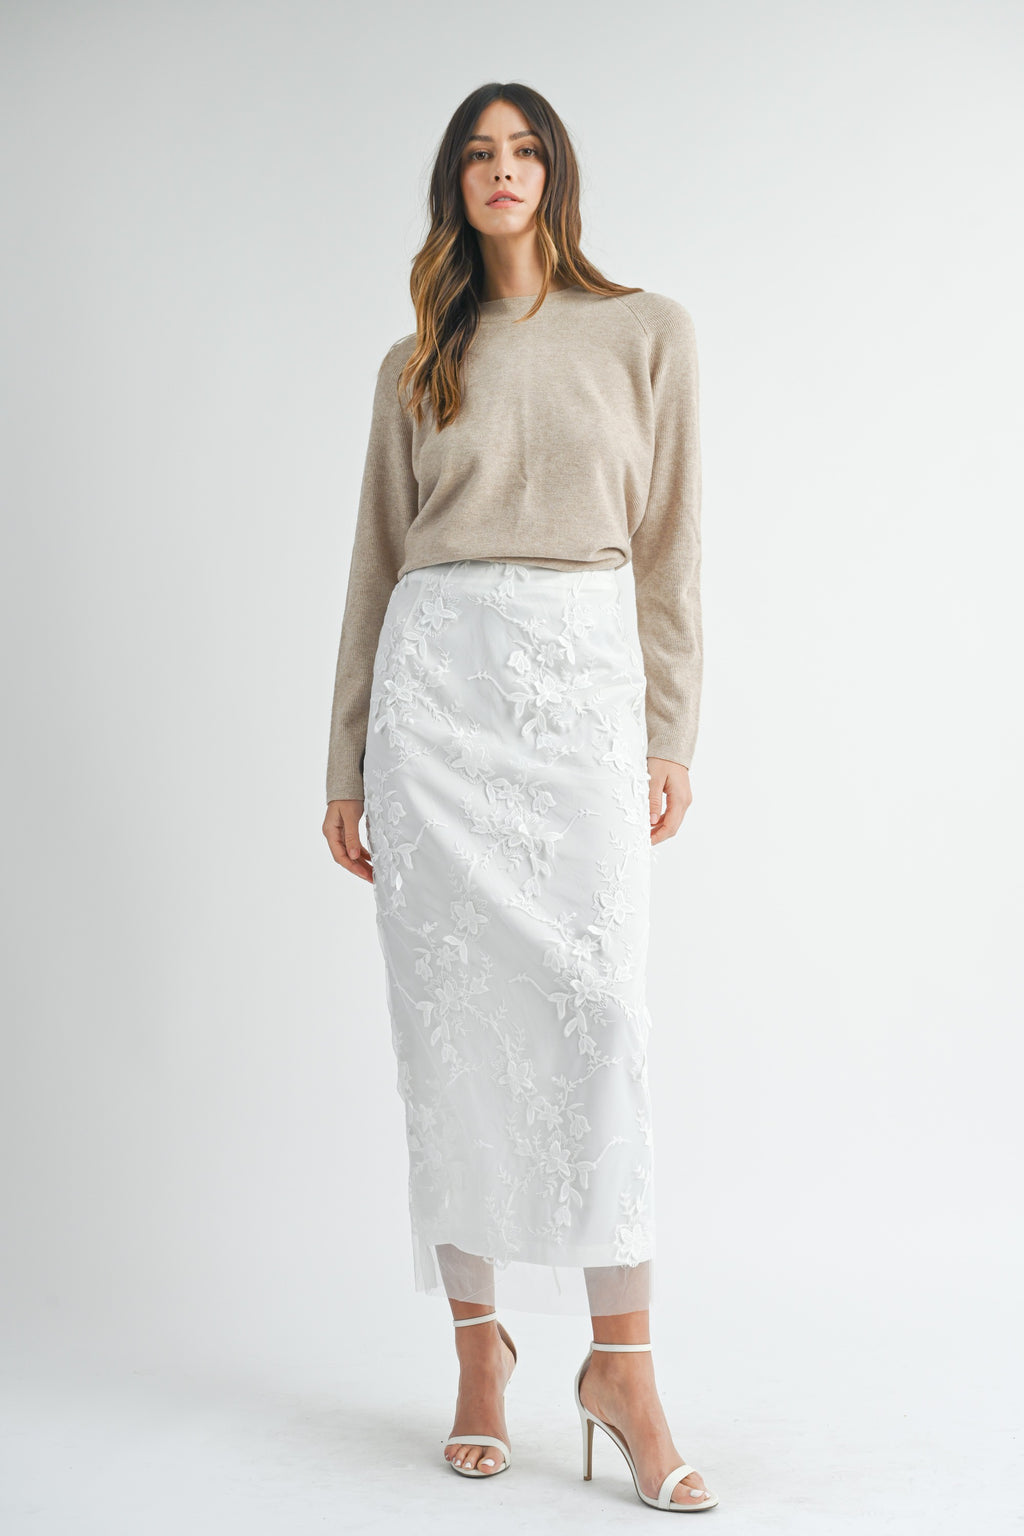 White Mesh Lace Maxi Skirt